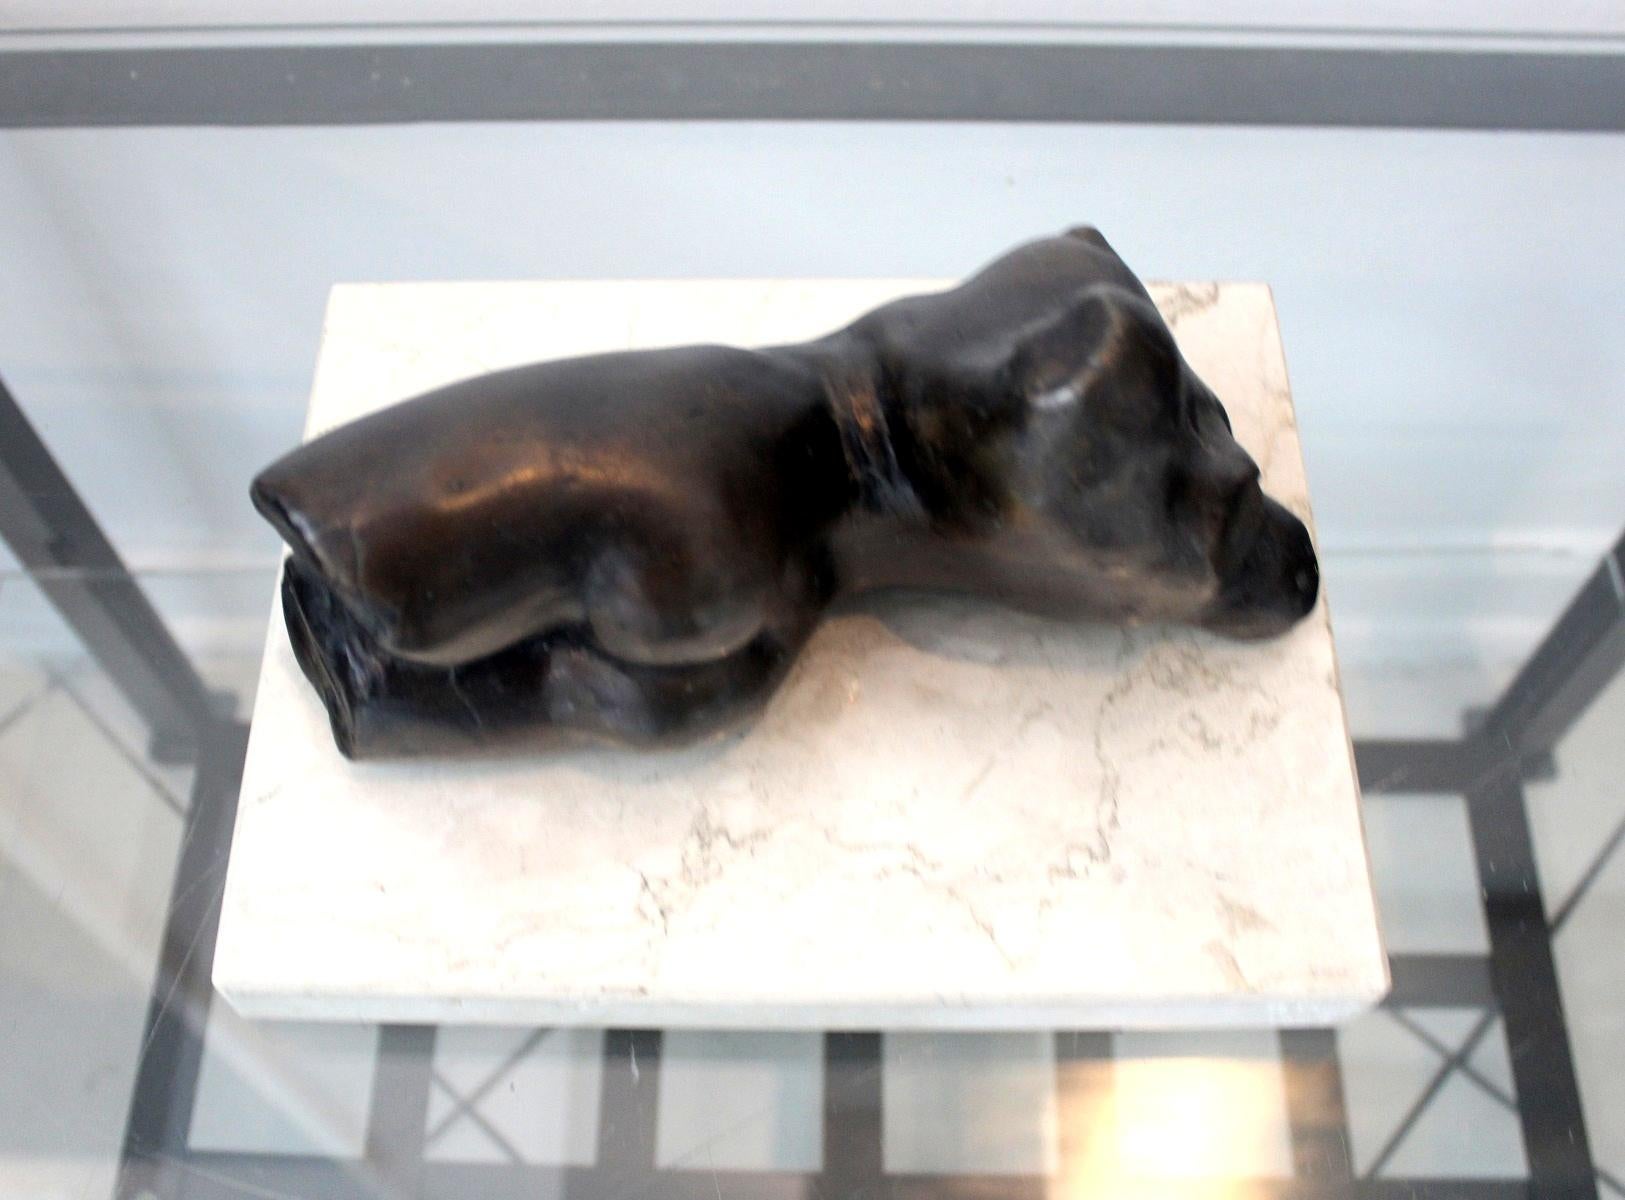 Female torso - XXI century, Bronze figurative sculpture, Nude - Other Art Style Sculpture by Ryszard Piotrowski